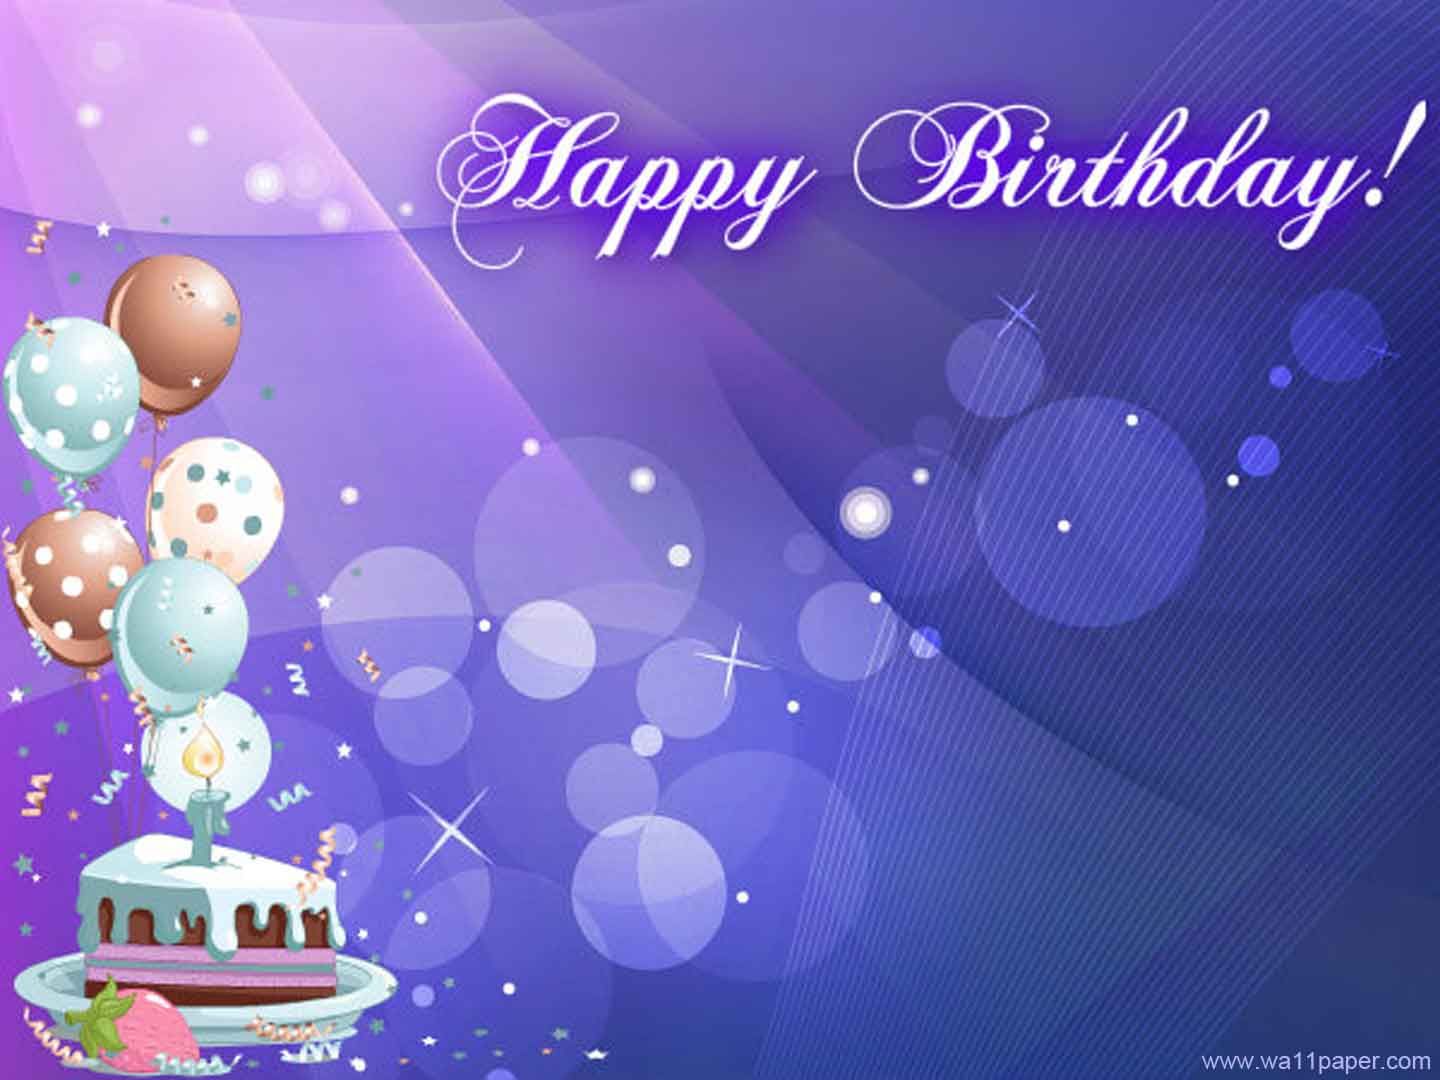 Free Wallpaper Birthday Blue Cake Wallpaper wallpaper. Happy birthday wishes photo, Happy birthday wishes image, Happy birthday blue